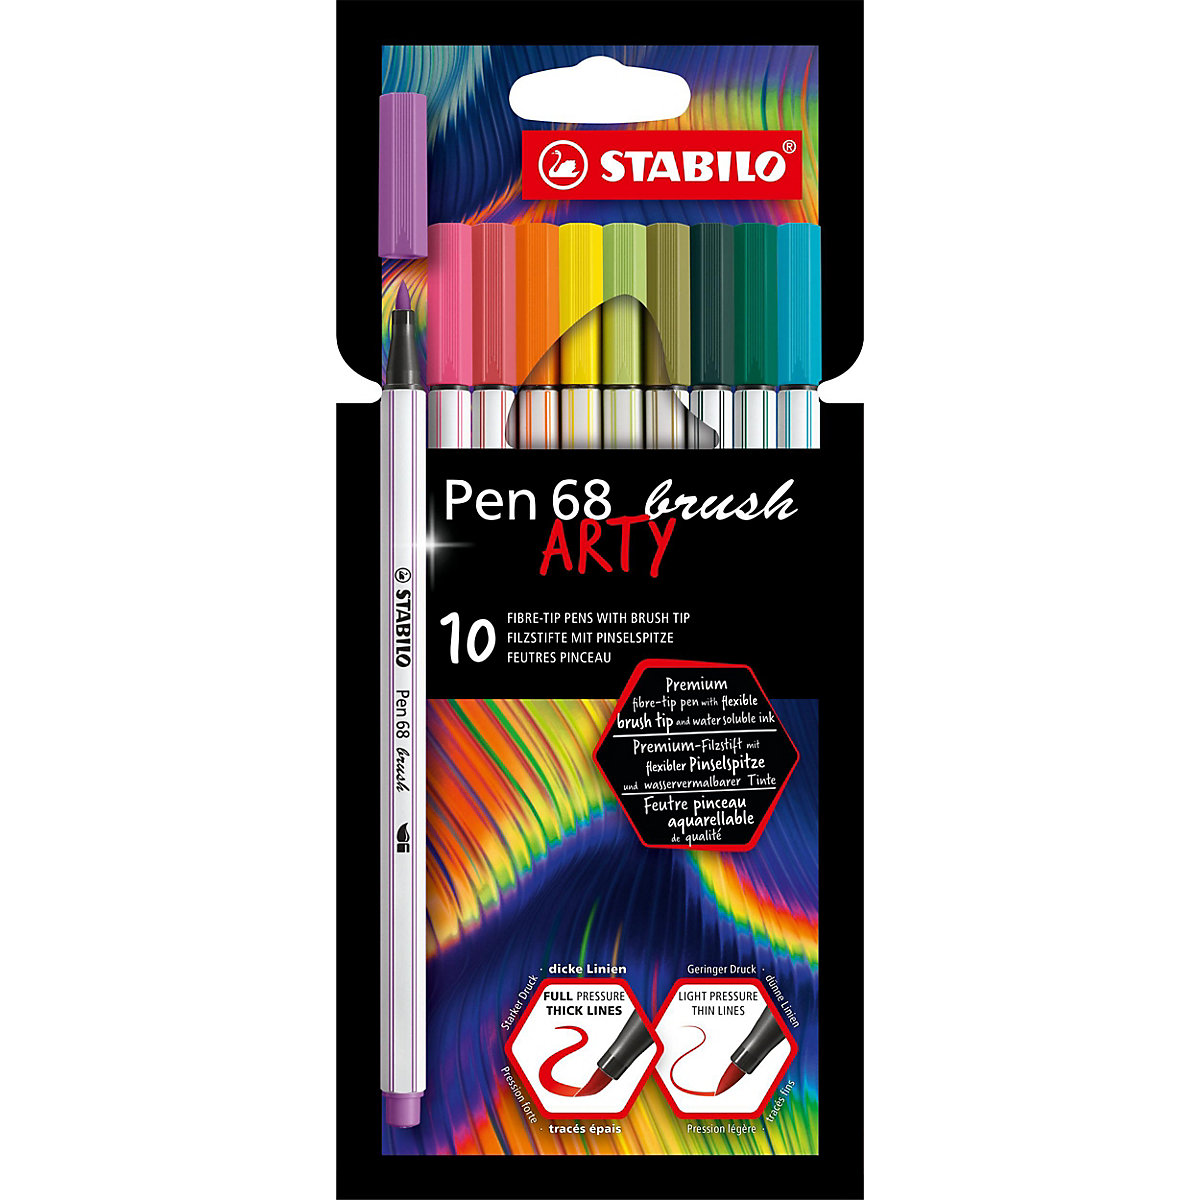 Premium-Filzstifte Pen 68 brush ARTY 10 Farben